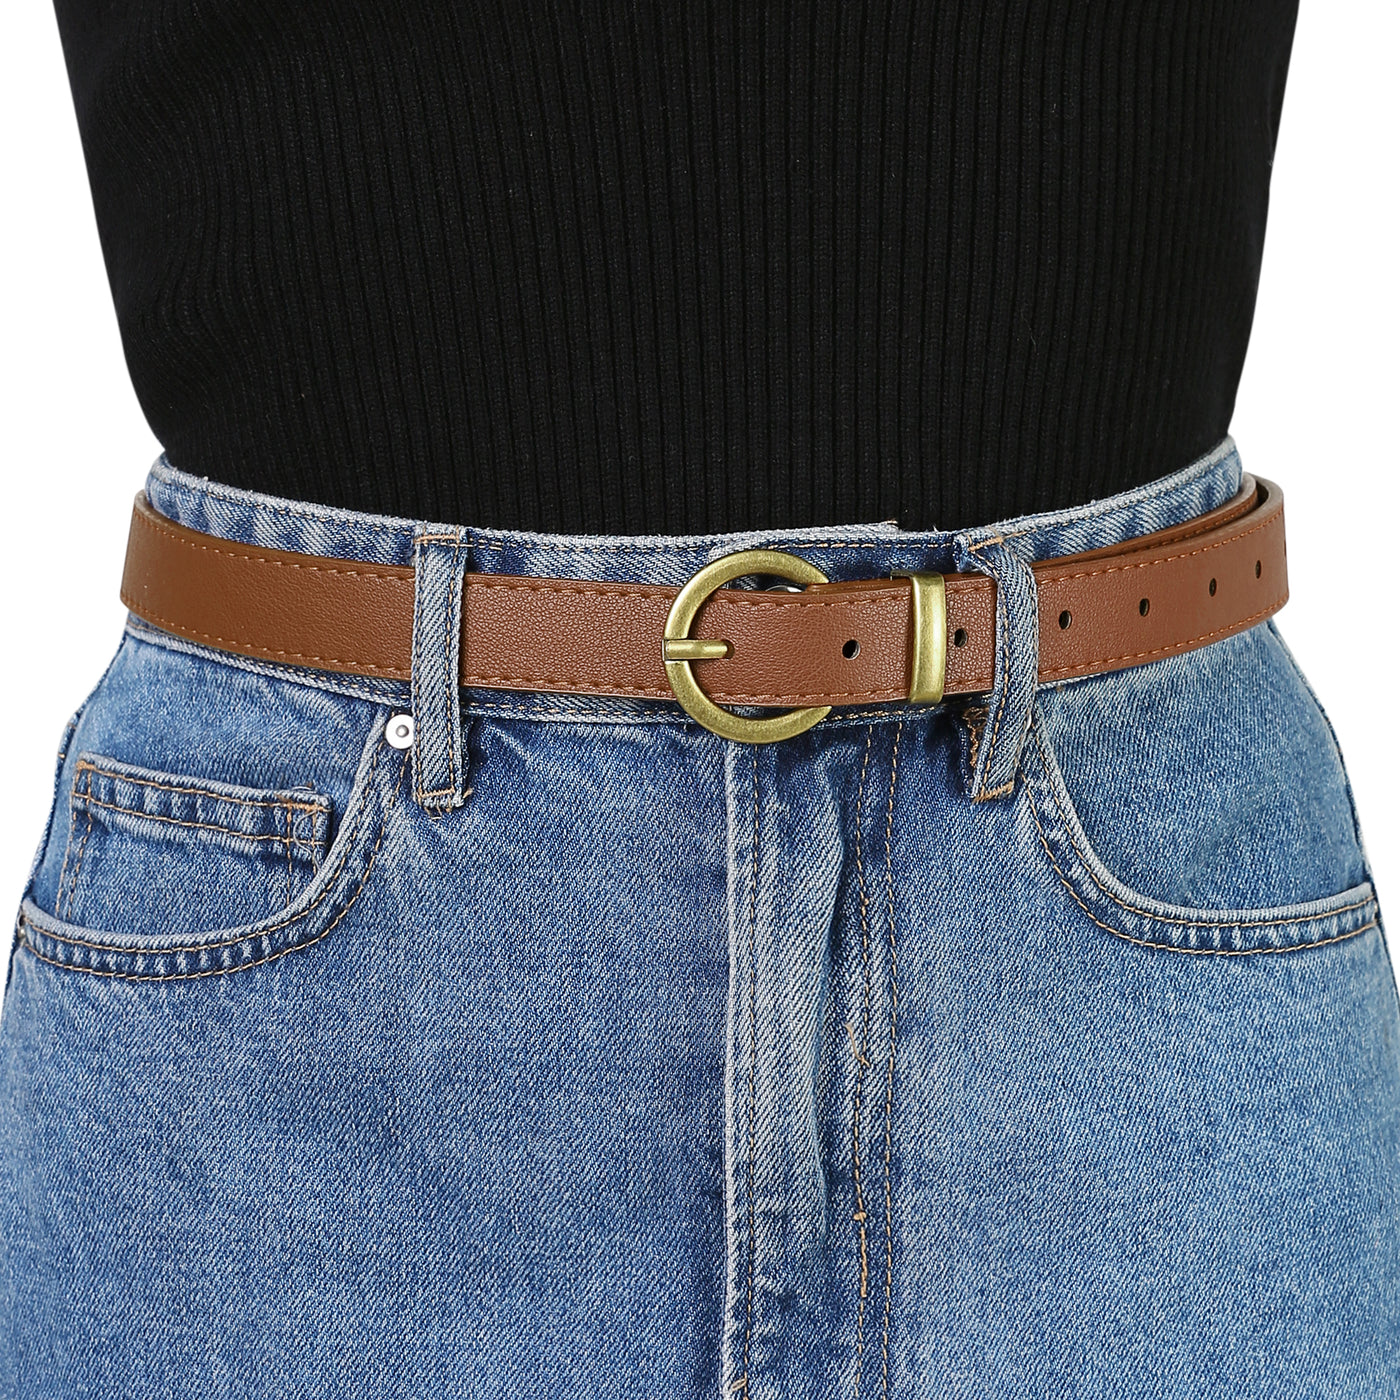 Allegra K PU Leather Bronze Metal Pin Buckle Thin Waist Jeans Dress Belts